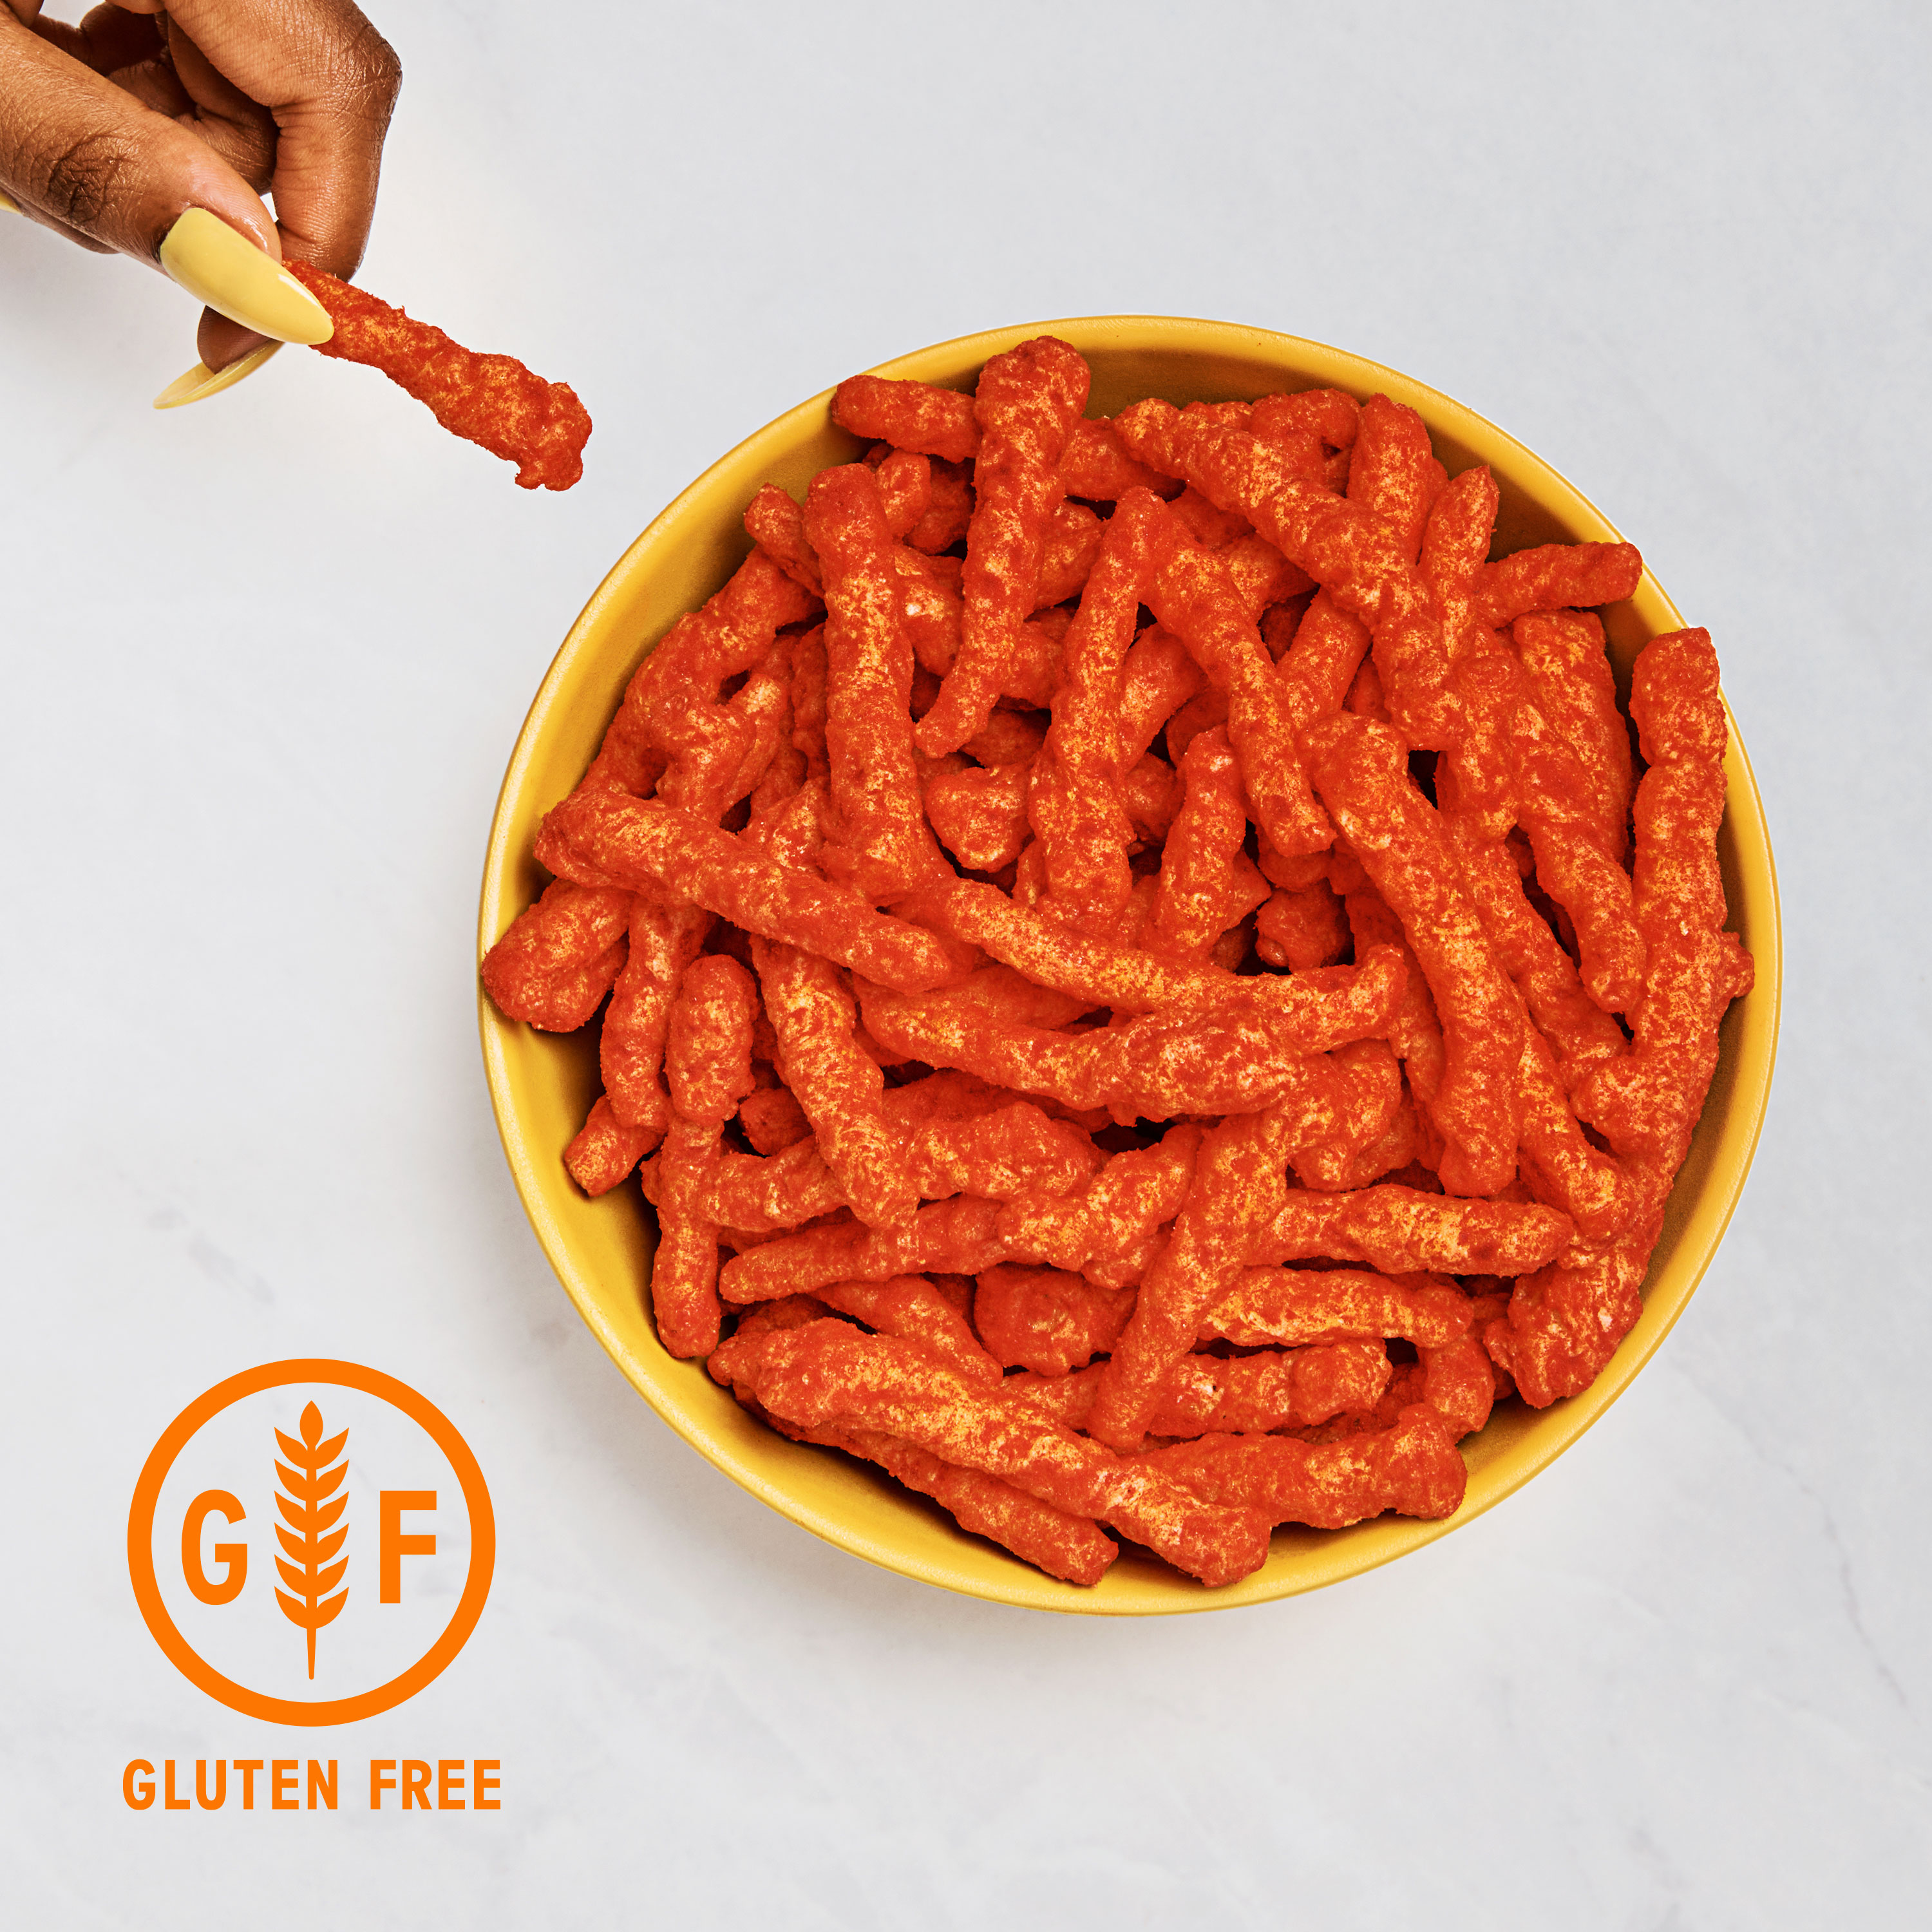 Cheetos Crunchy, Flamin' Hot, 8.5oz Bag, Snack Chips - image 5 of 9